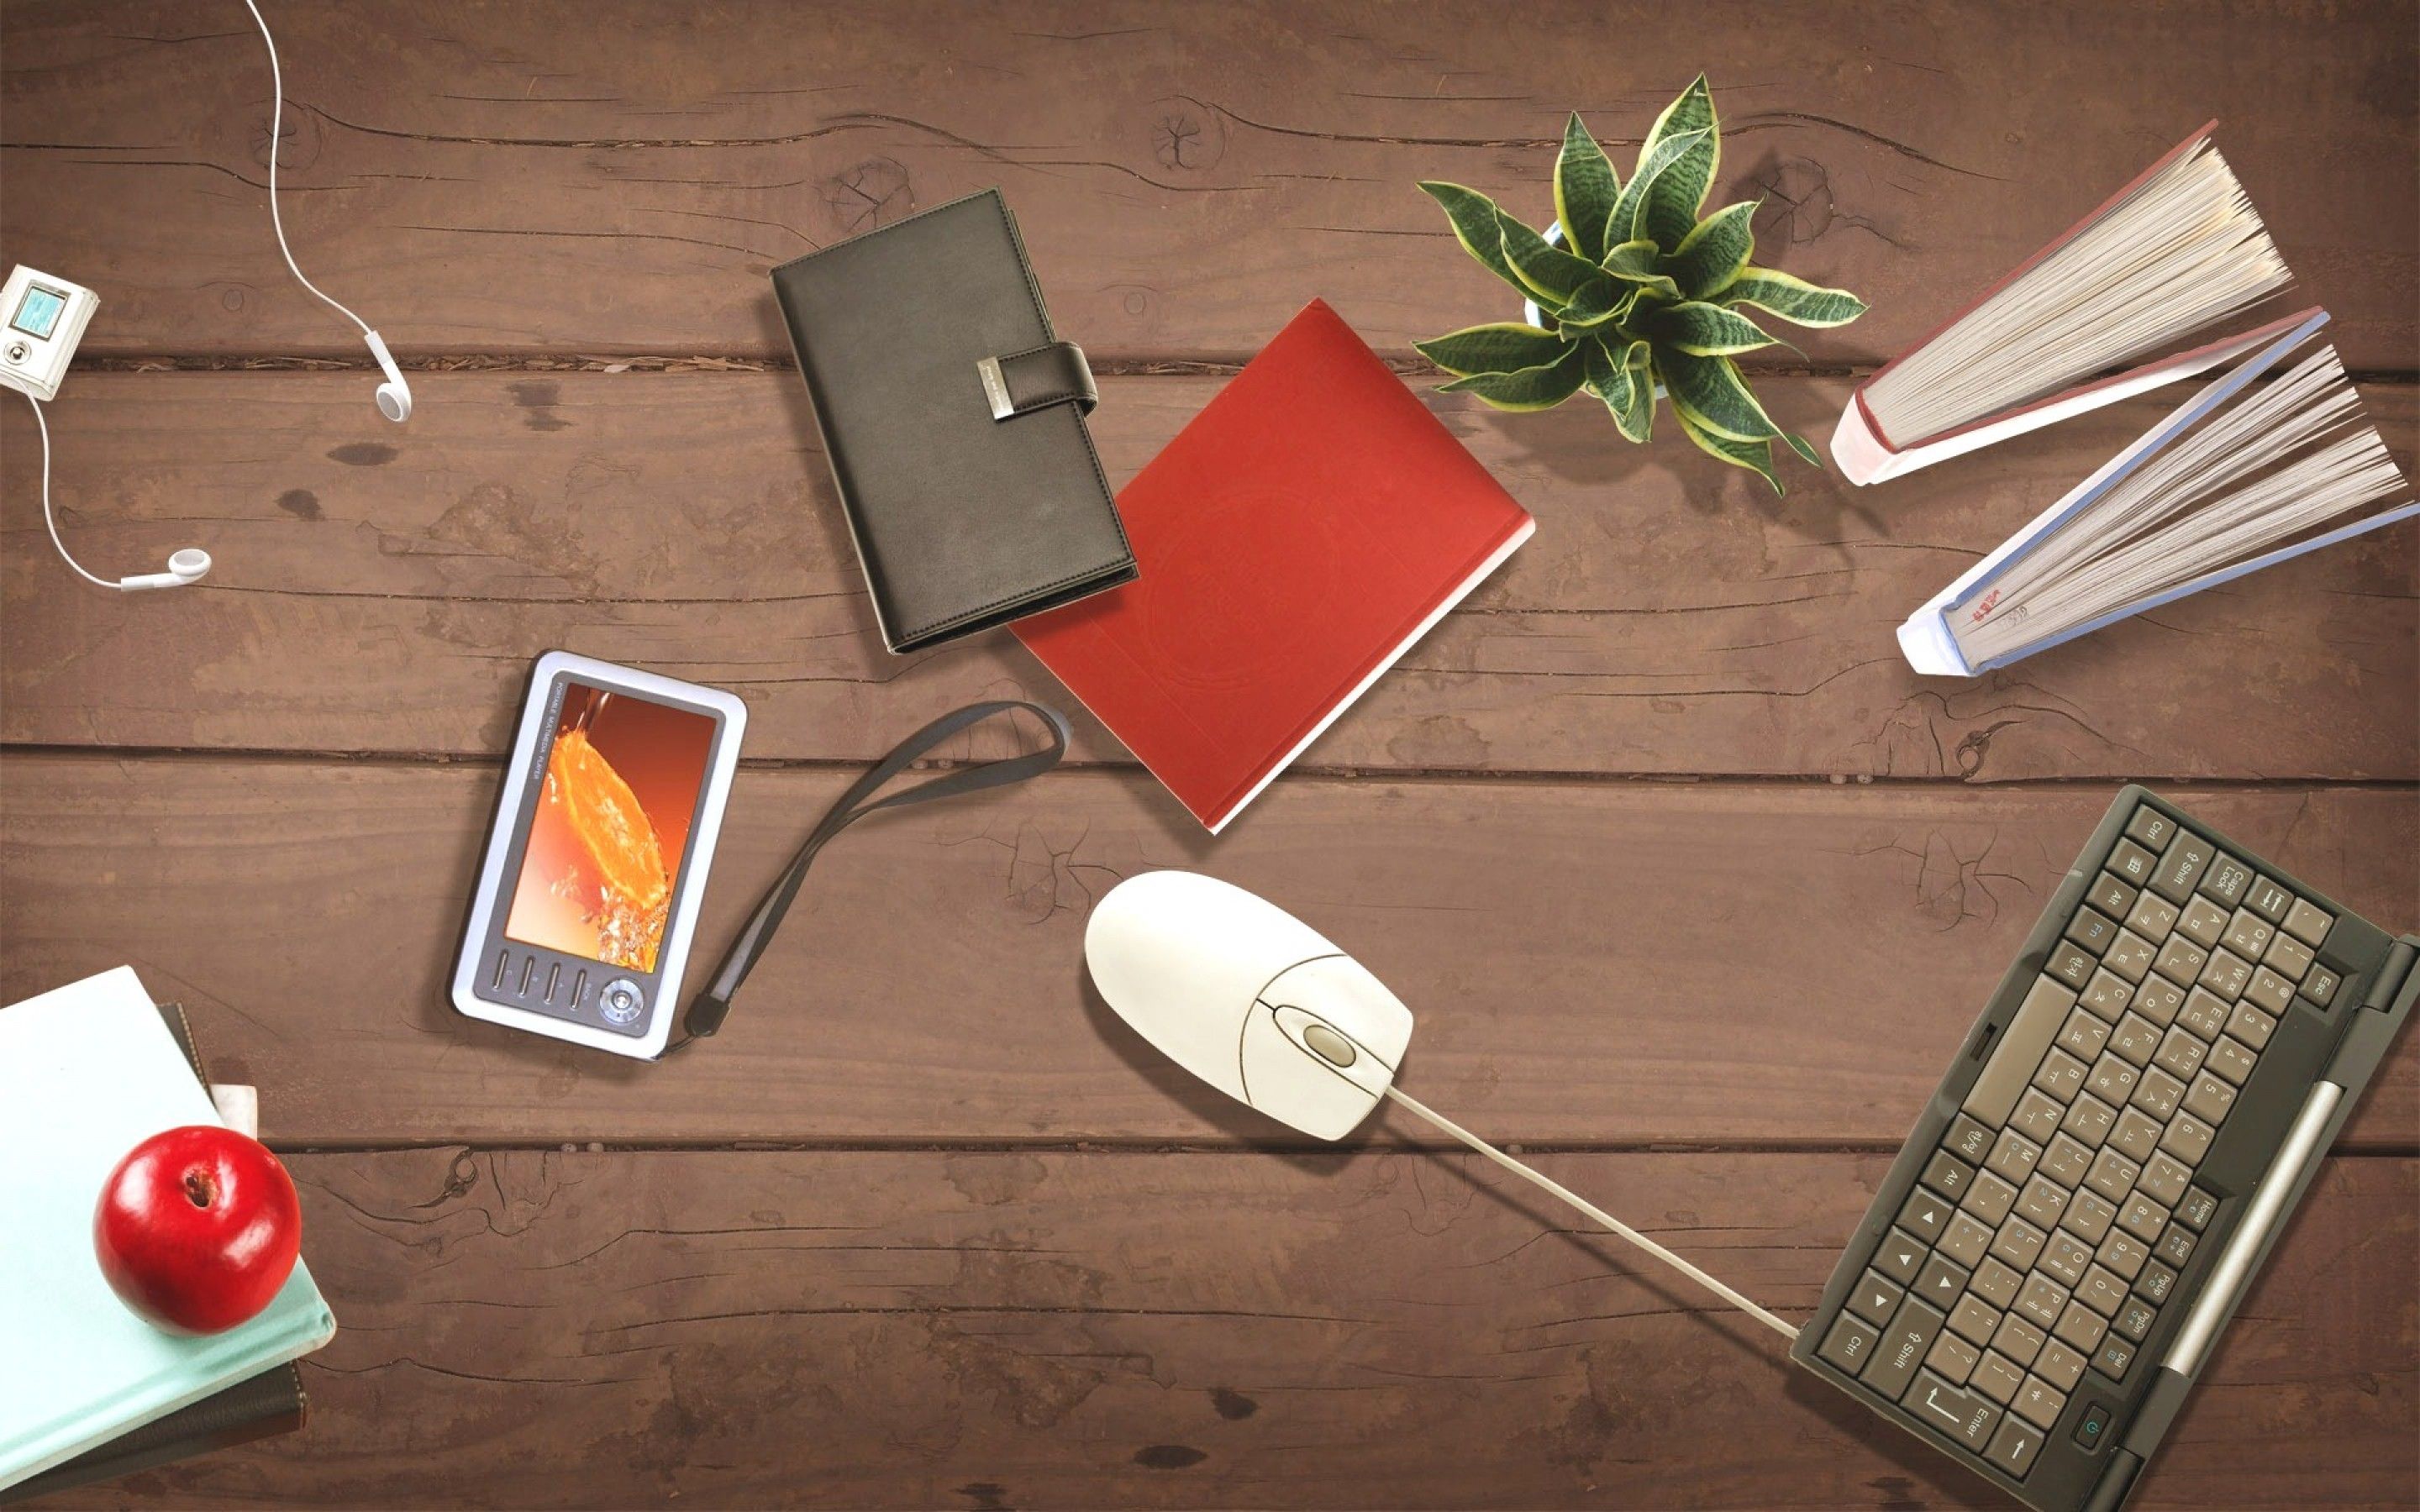 Wooden desk, laptop, mouse, book, plant, phone, notebook, apple